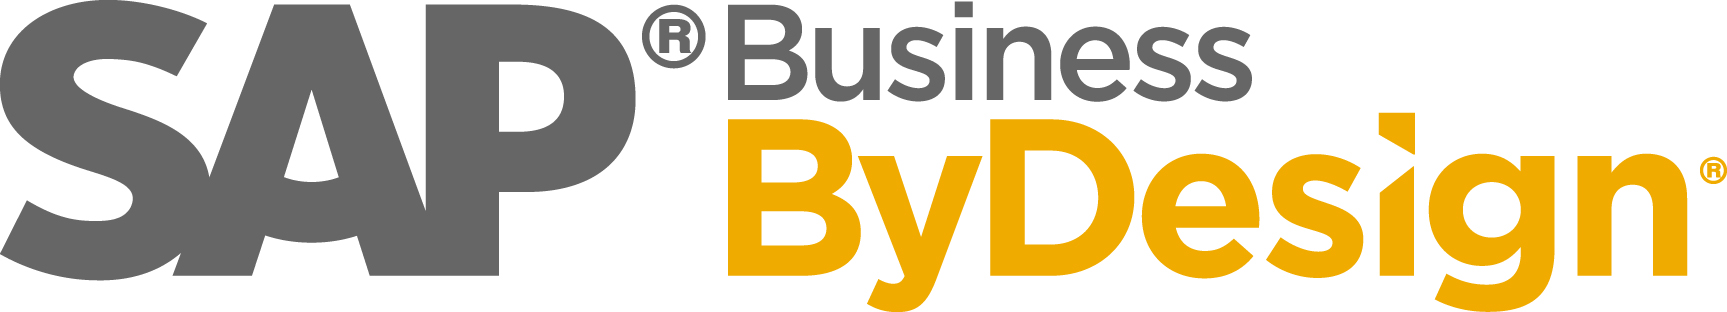 SAP Business ByDesign Logo